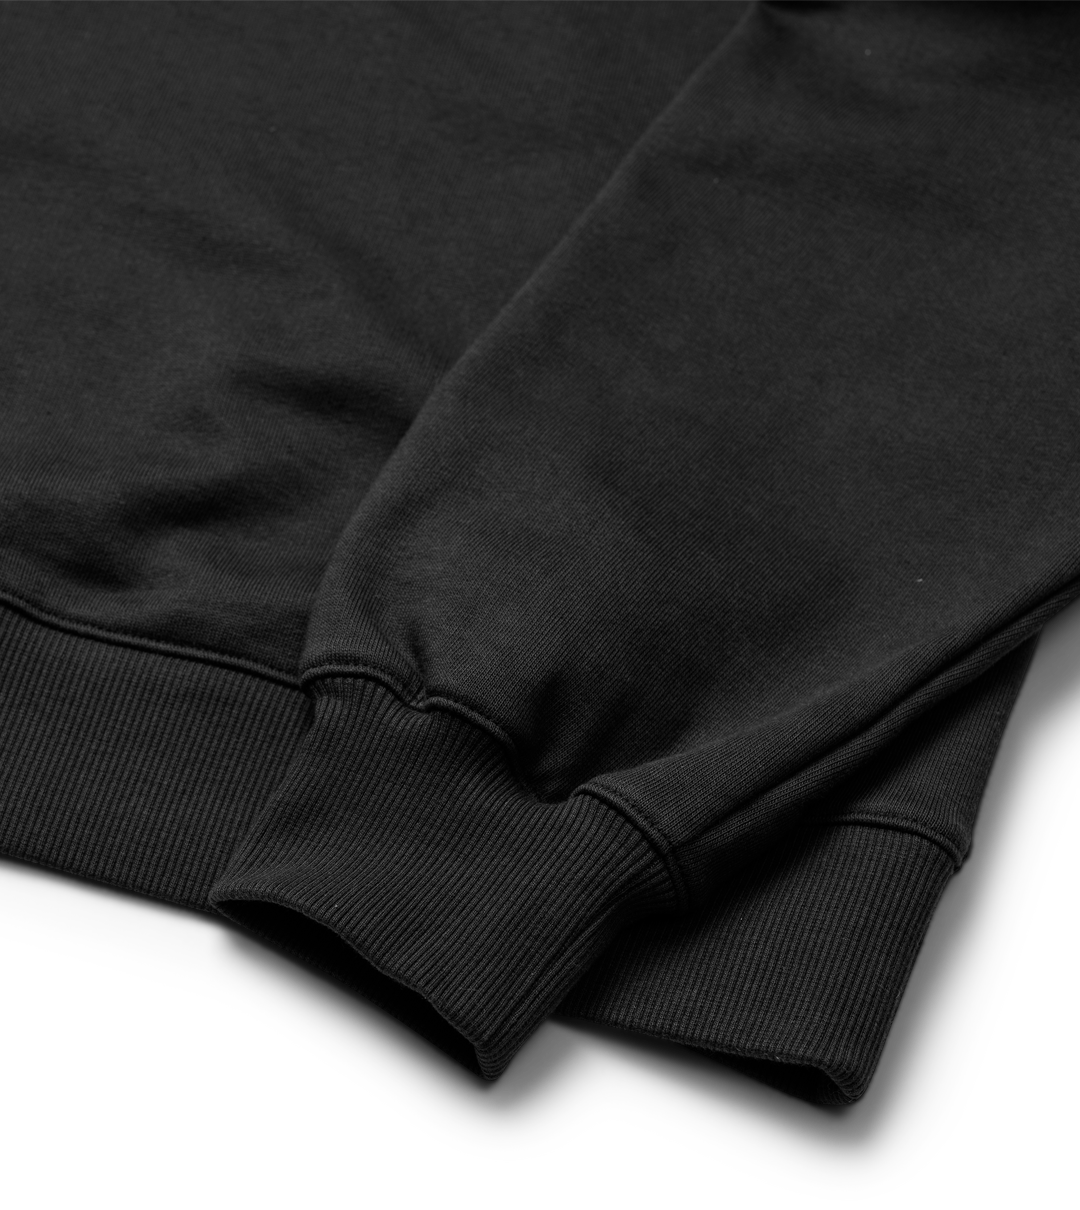 6 SIEGE - Nokk Black Sweatshirt